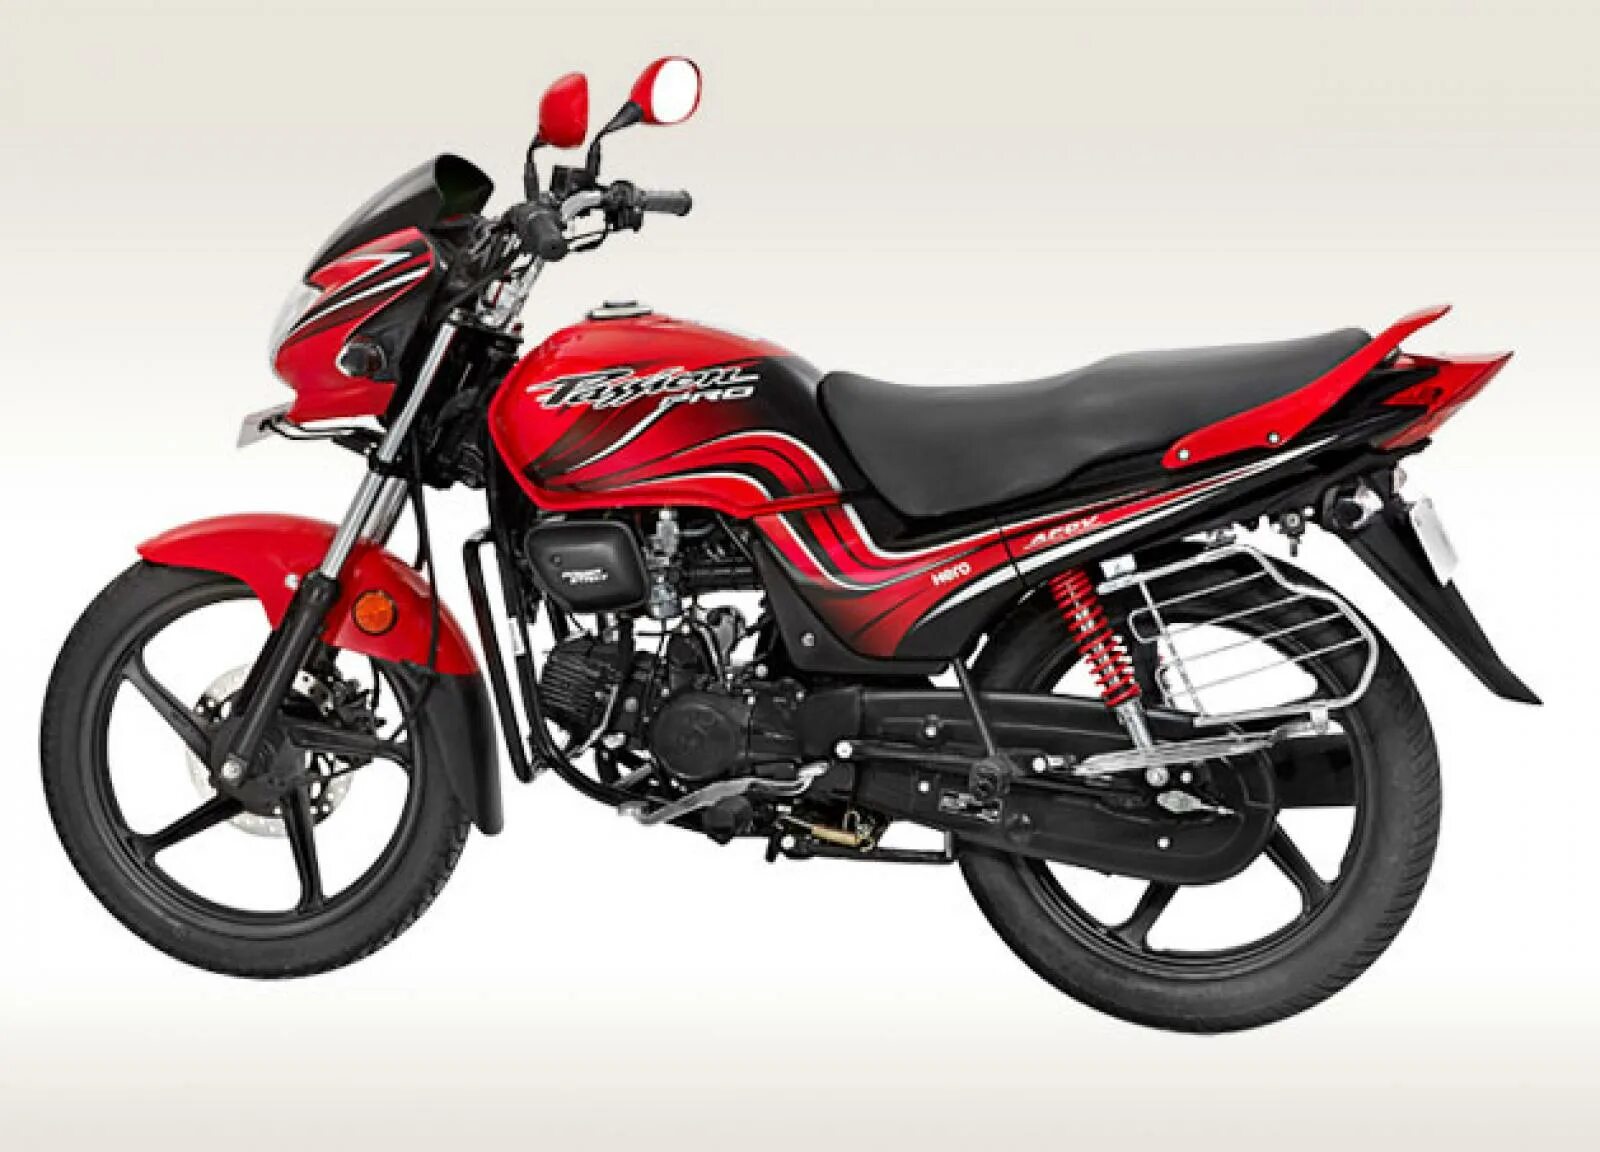 Мотоцикл promax stryker 200. Honda Hero. Honda Pro. Passion Pro. Gold line мотоцикл.